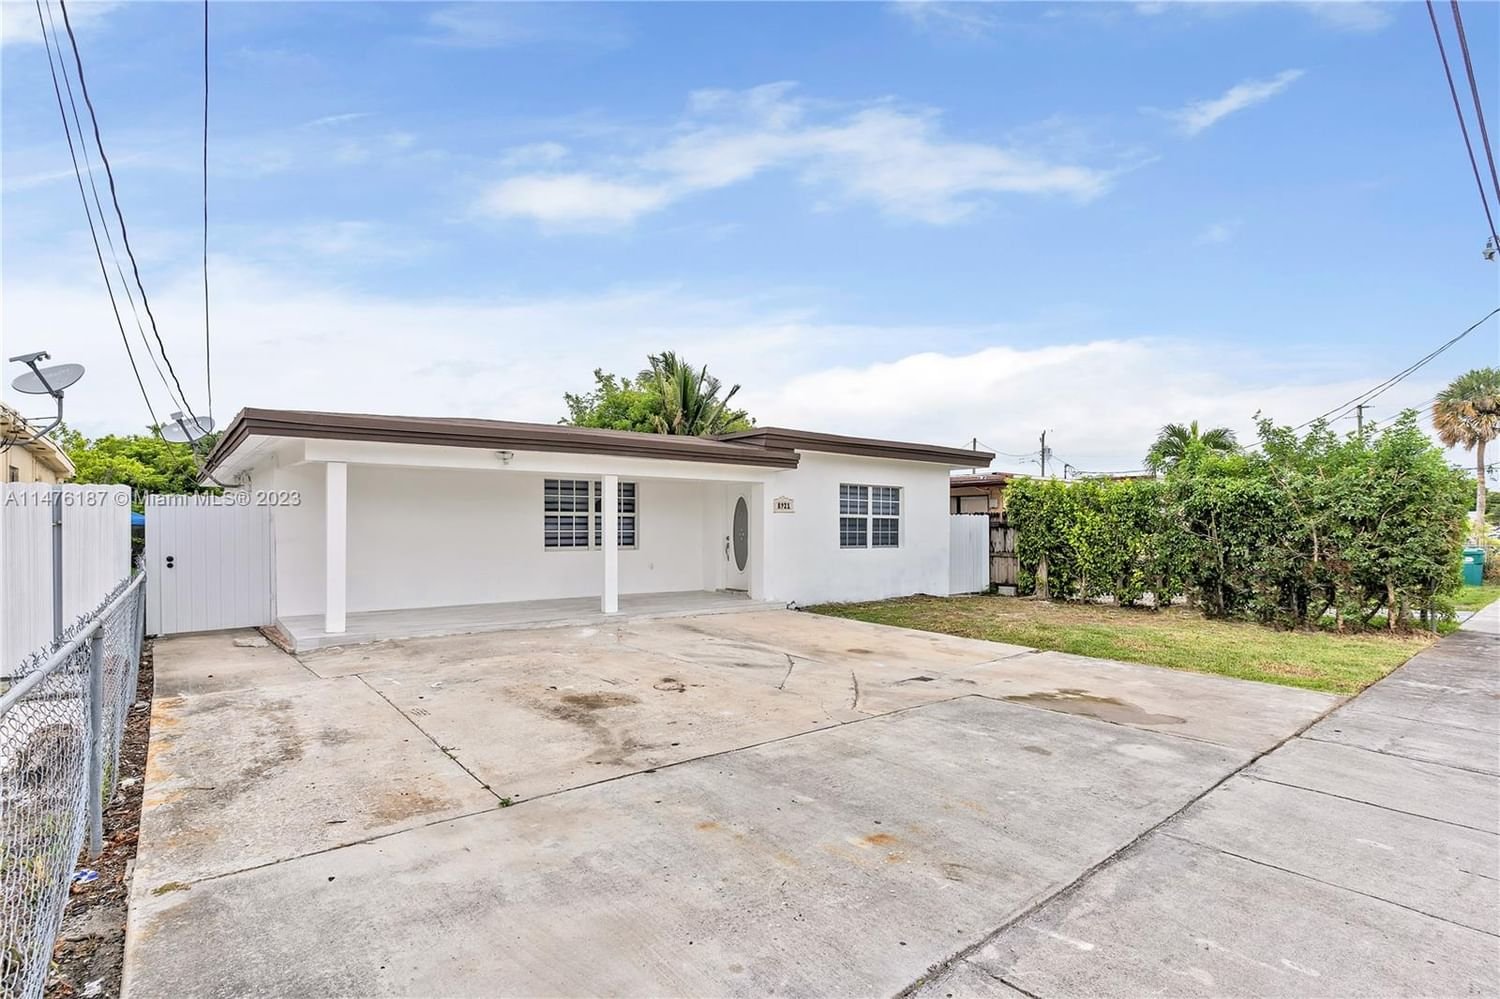 Real estate property located at 8921 34th St, Miami-Dade County, Miami, FL